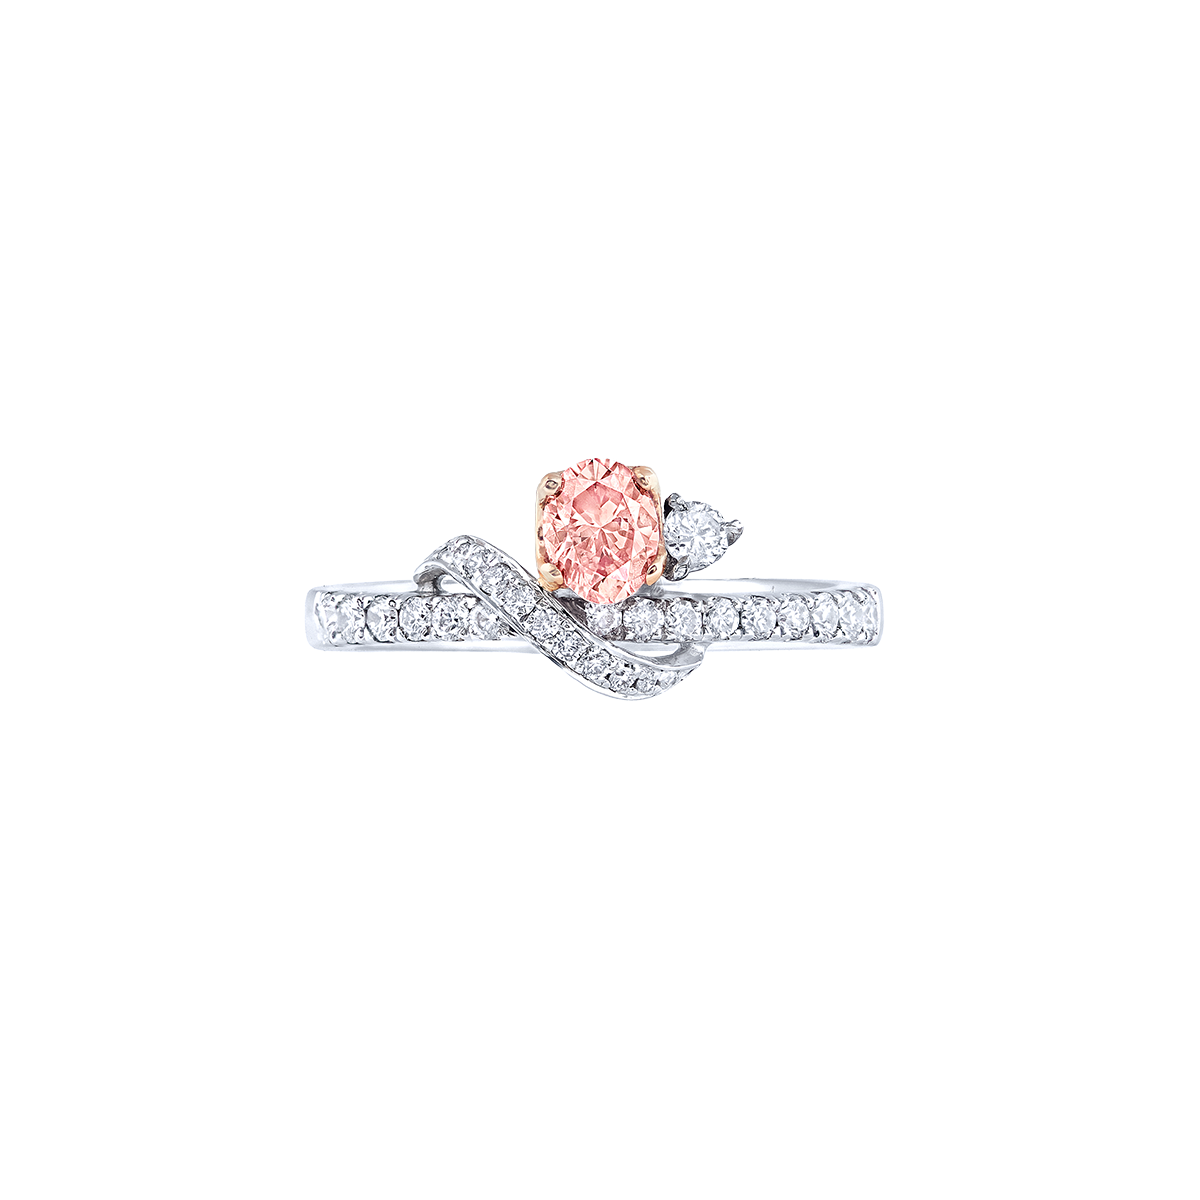 0.26 克拉 阿蓋爾粉鑽鑽戒
Pink Diamond from Argyle Mine 
and Diamond Ring